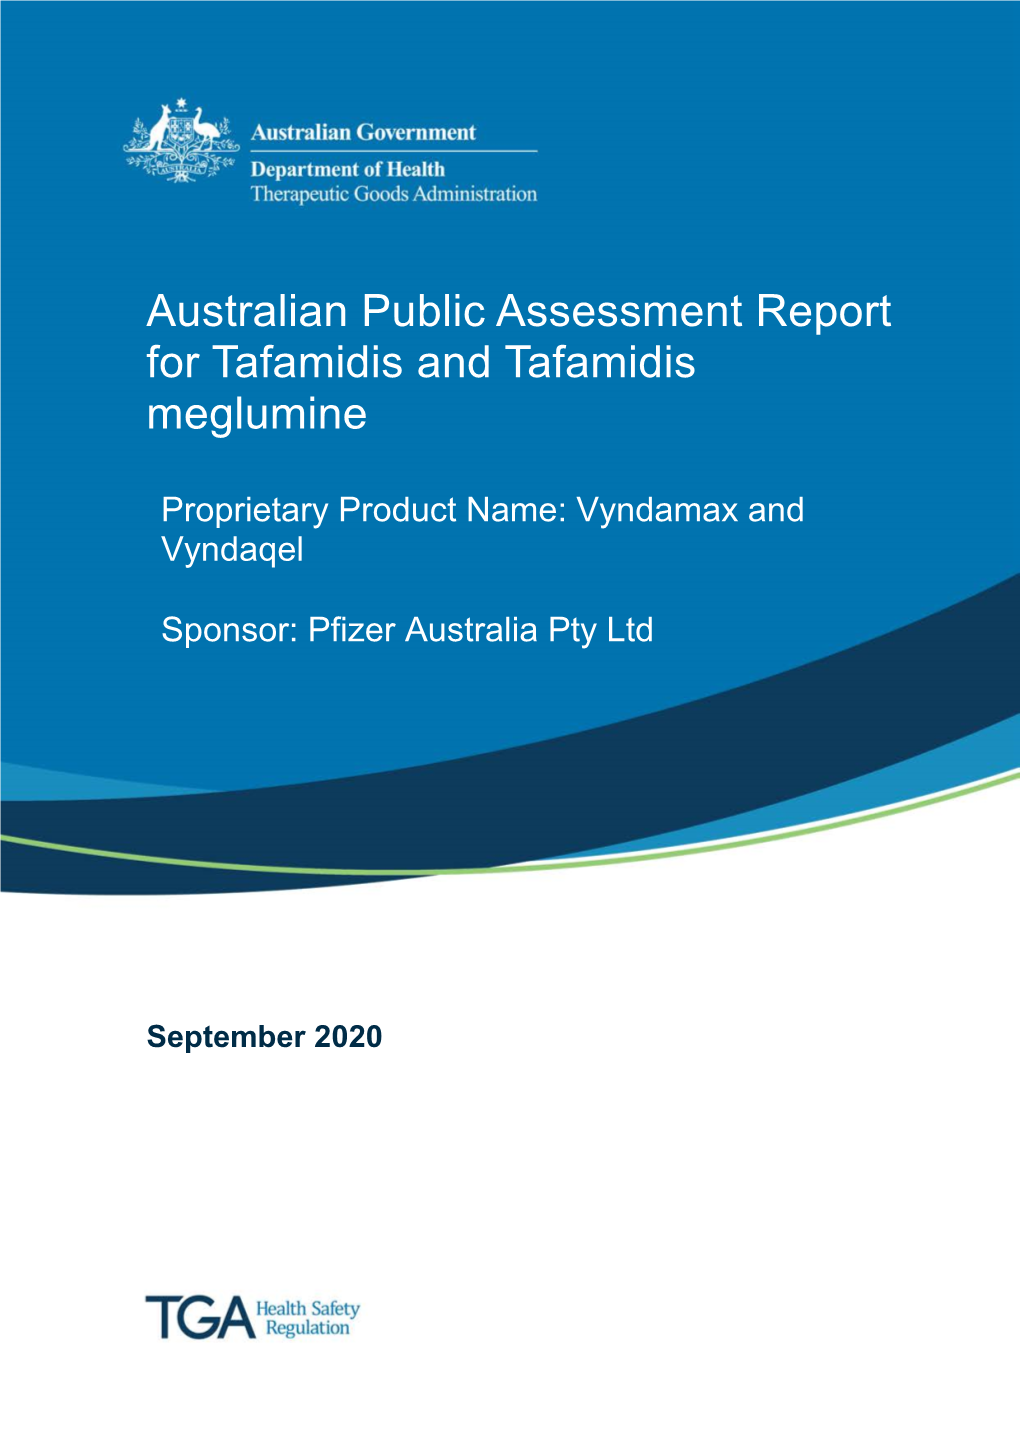 Australian Public Assessment Report for Tafamidis and Tafamidis Meglumine